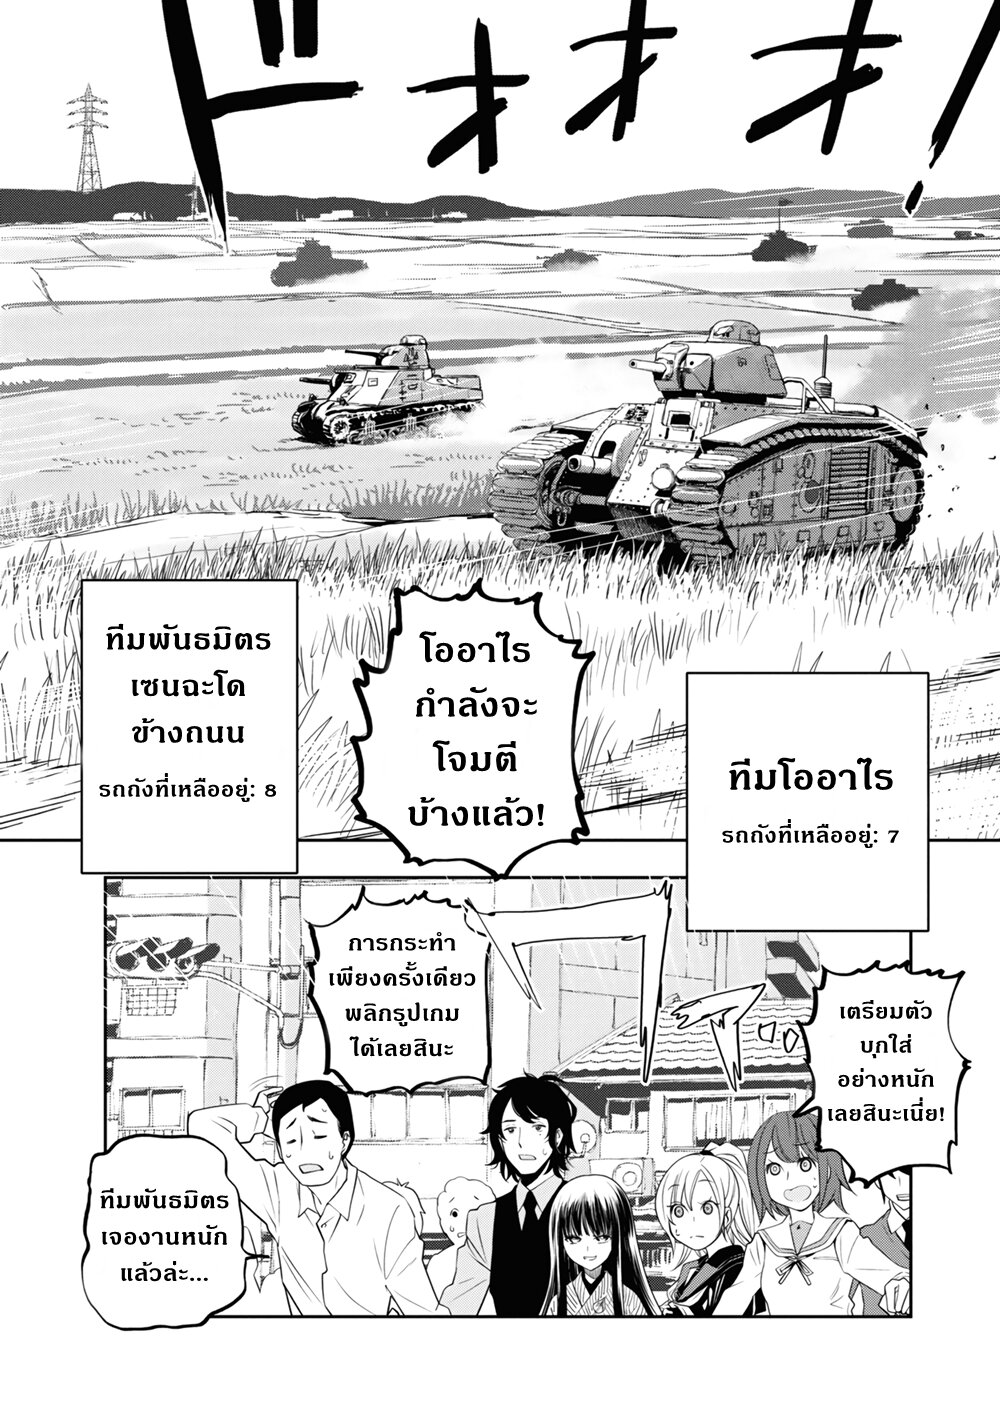 Girls und Panzer – Ribbon no Musha60 (8)